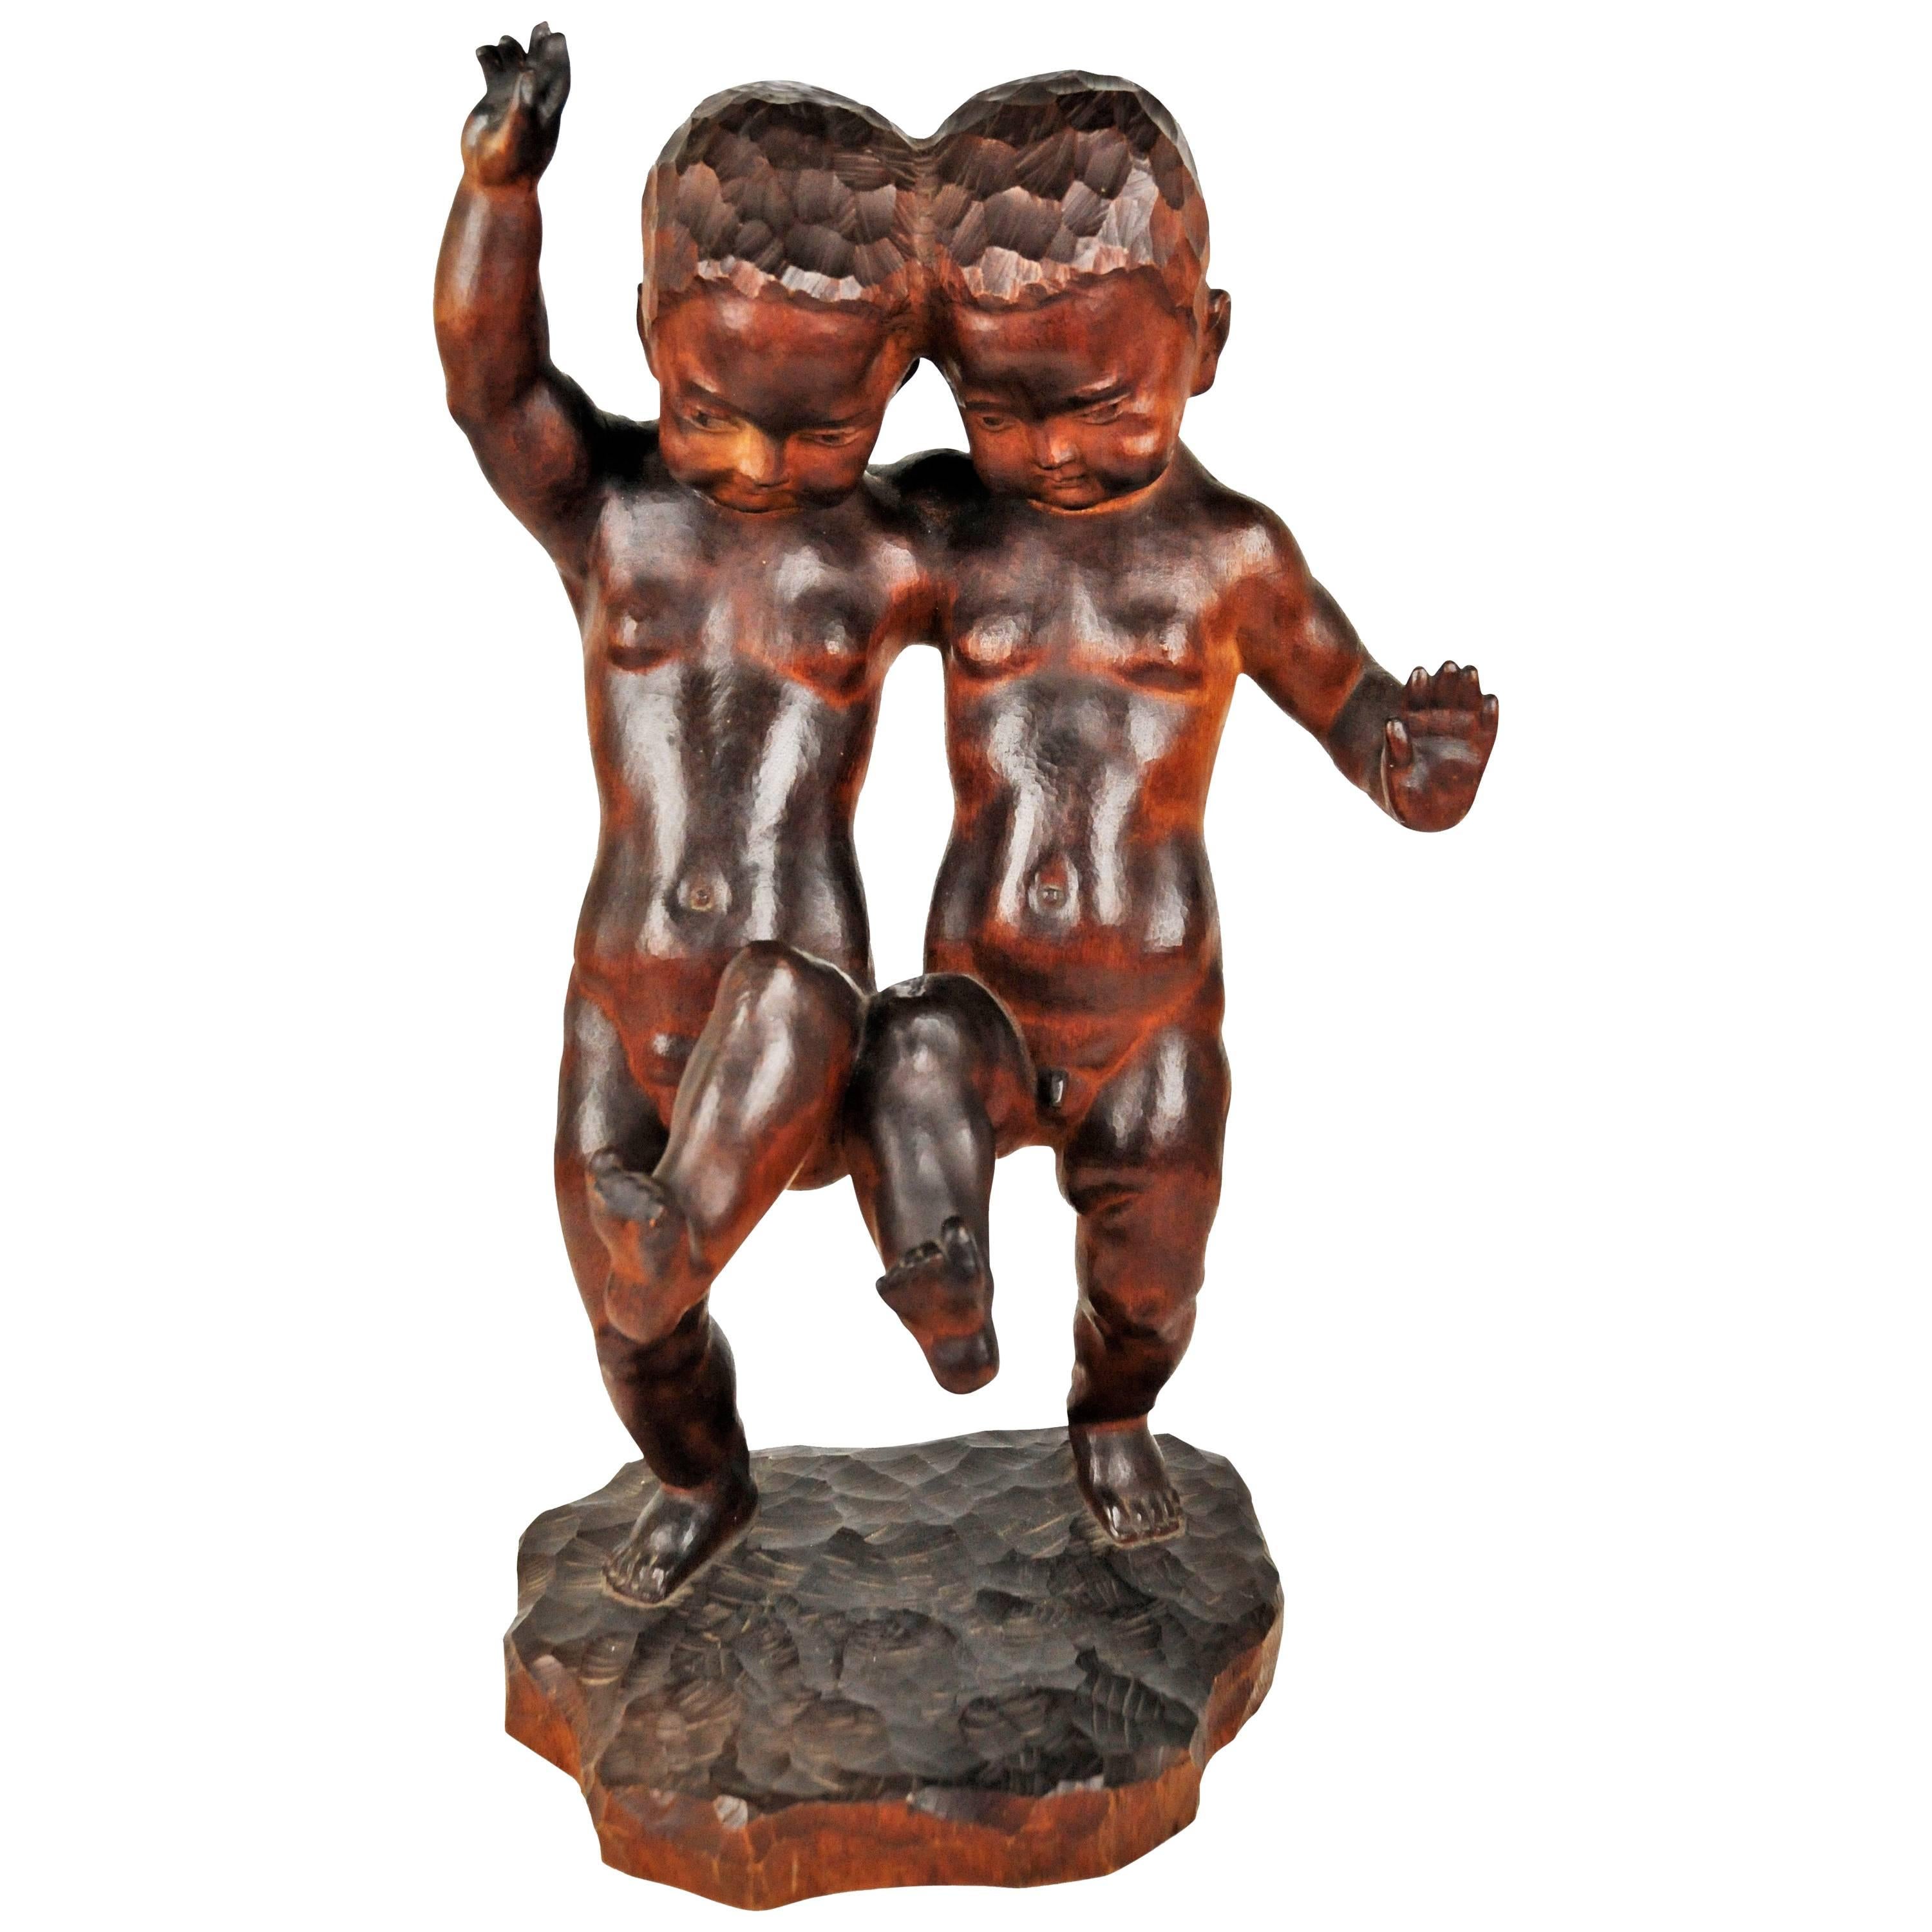 Dancing Boys, Black Forest Art Deco, Hand-Carved Wood Sculpture, 1920s